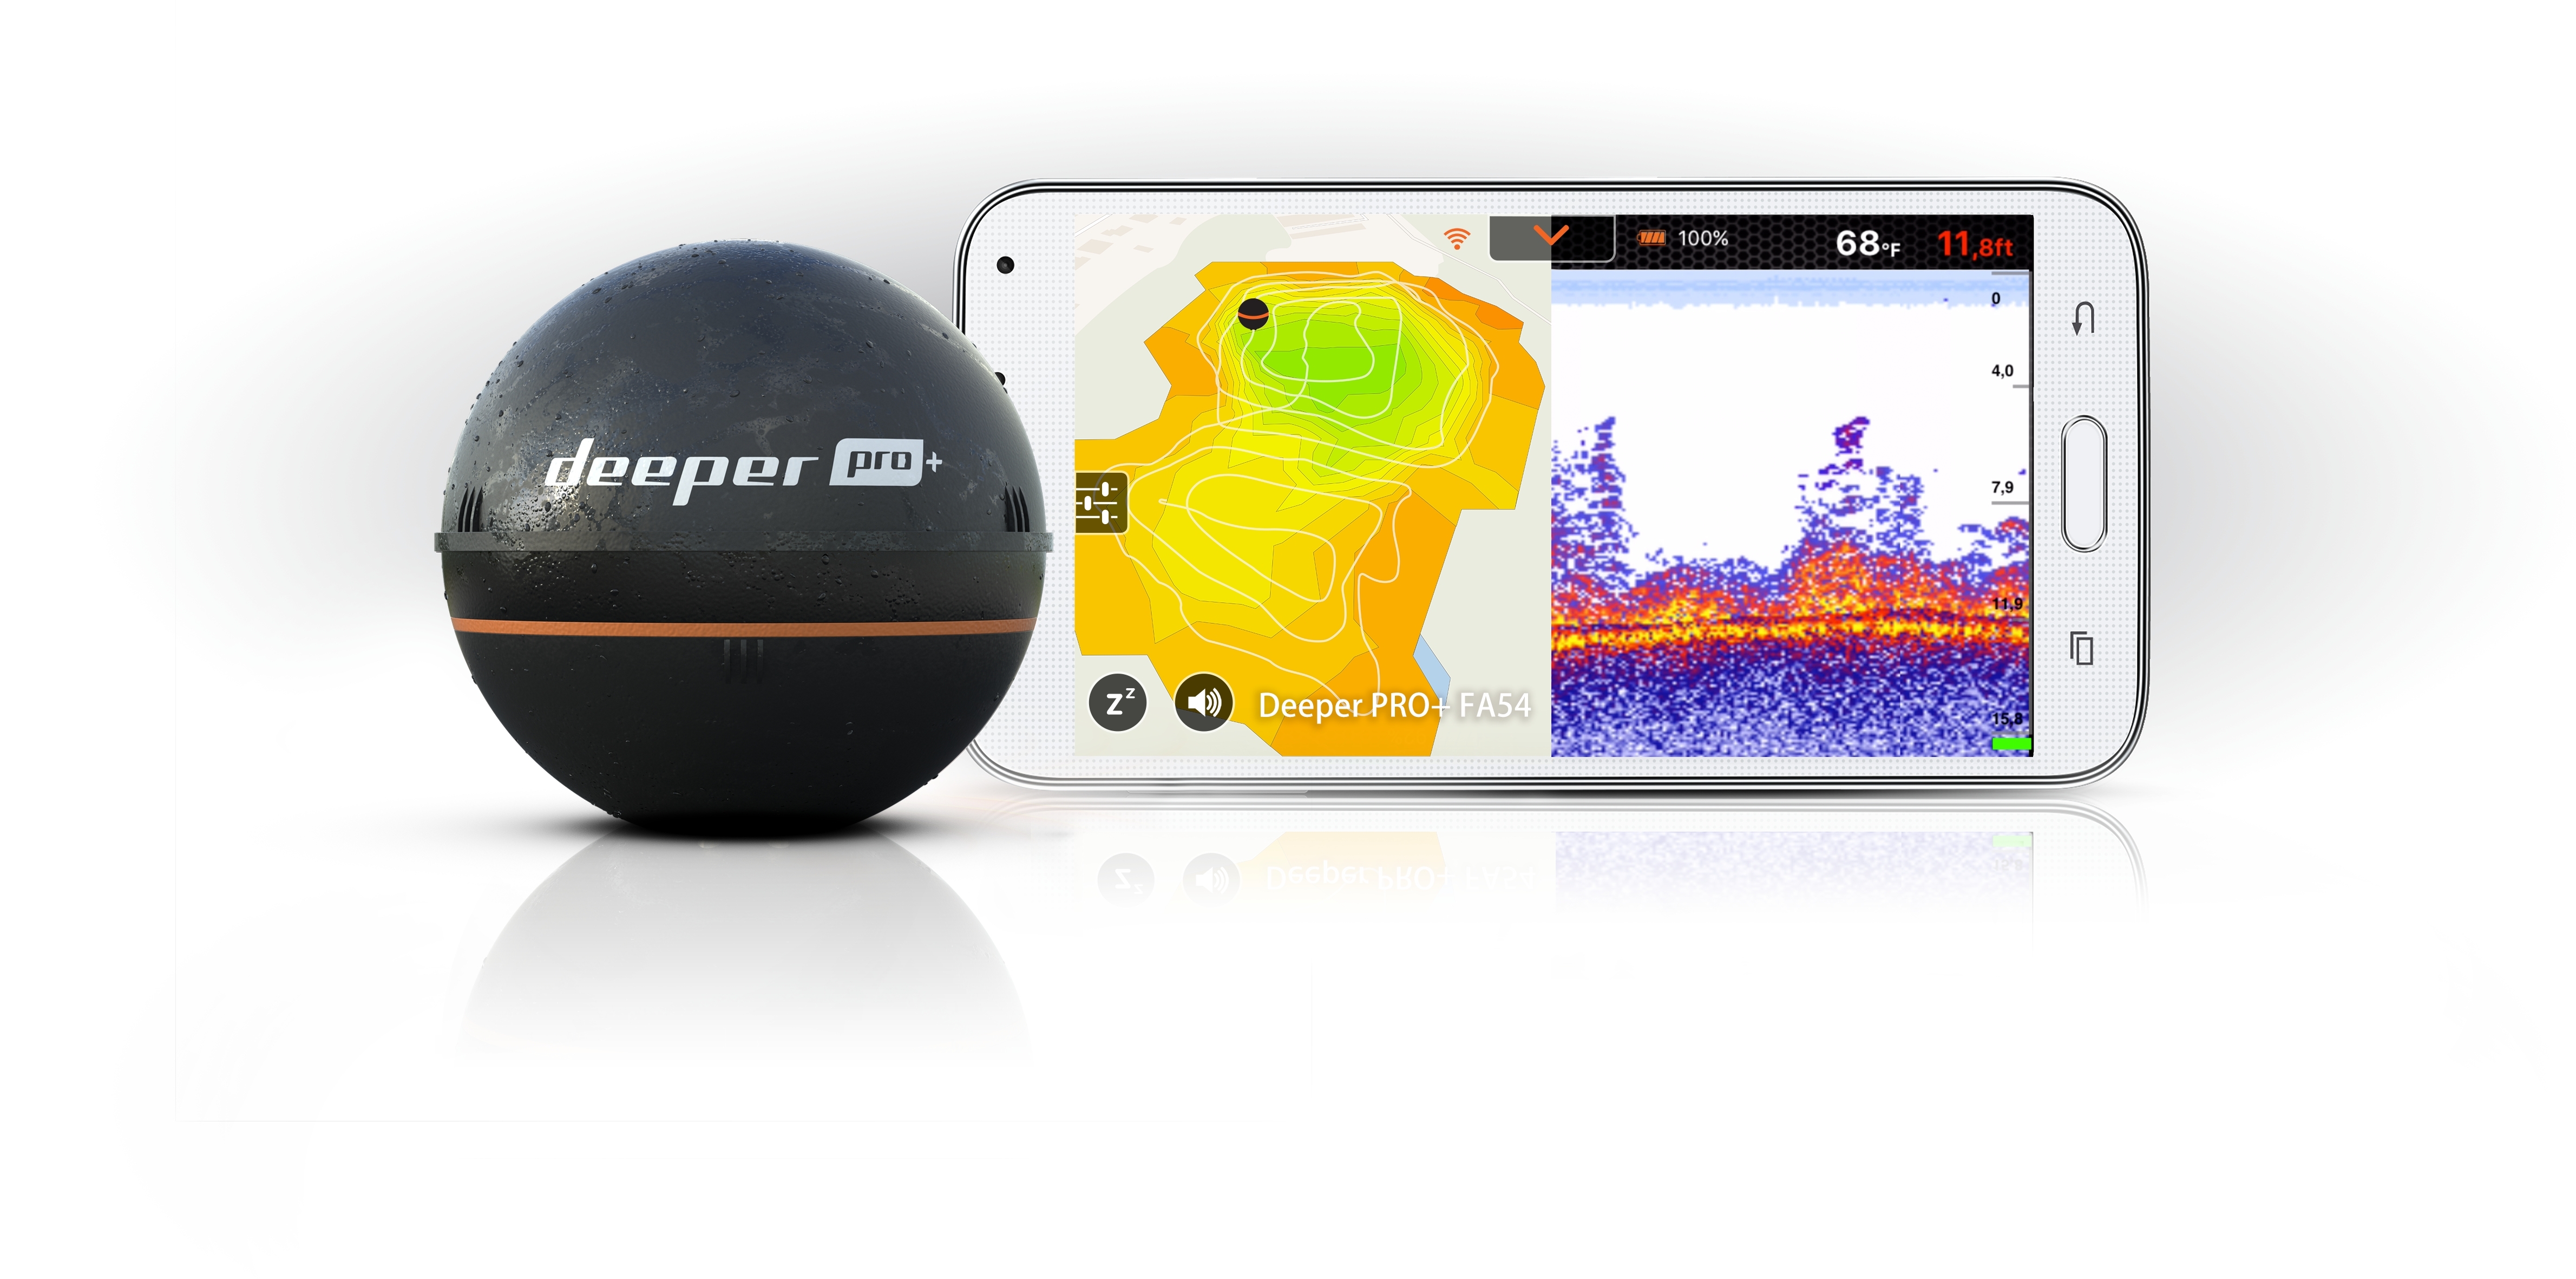 OriginGPS' Miniature GPS Module Improves Fish Tracking With Award-Winning  Deeper Smart Sonar